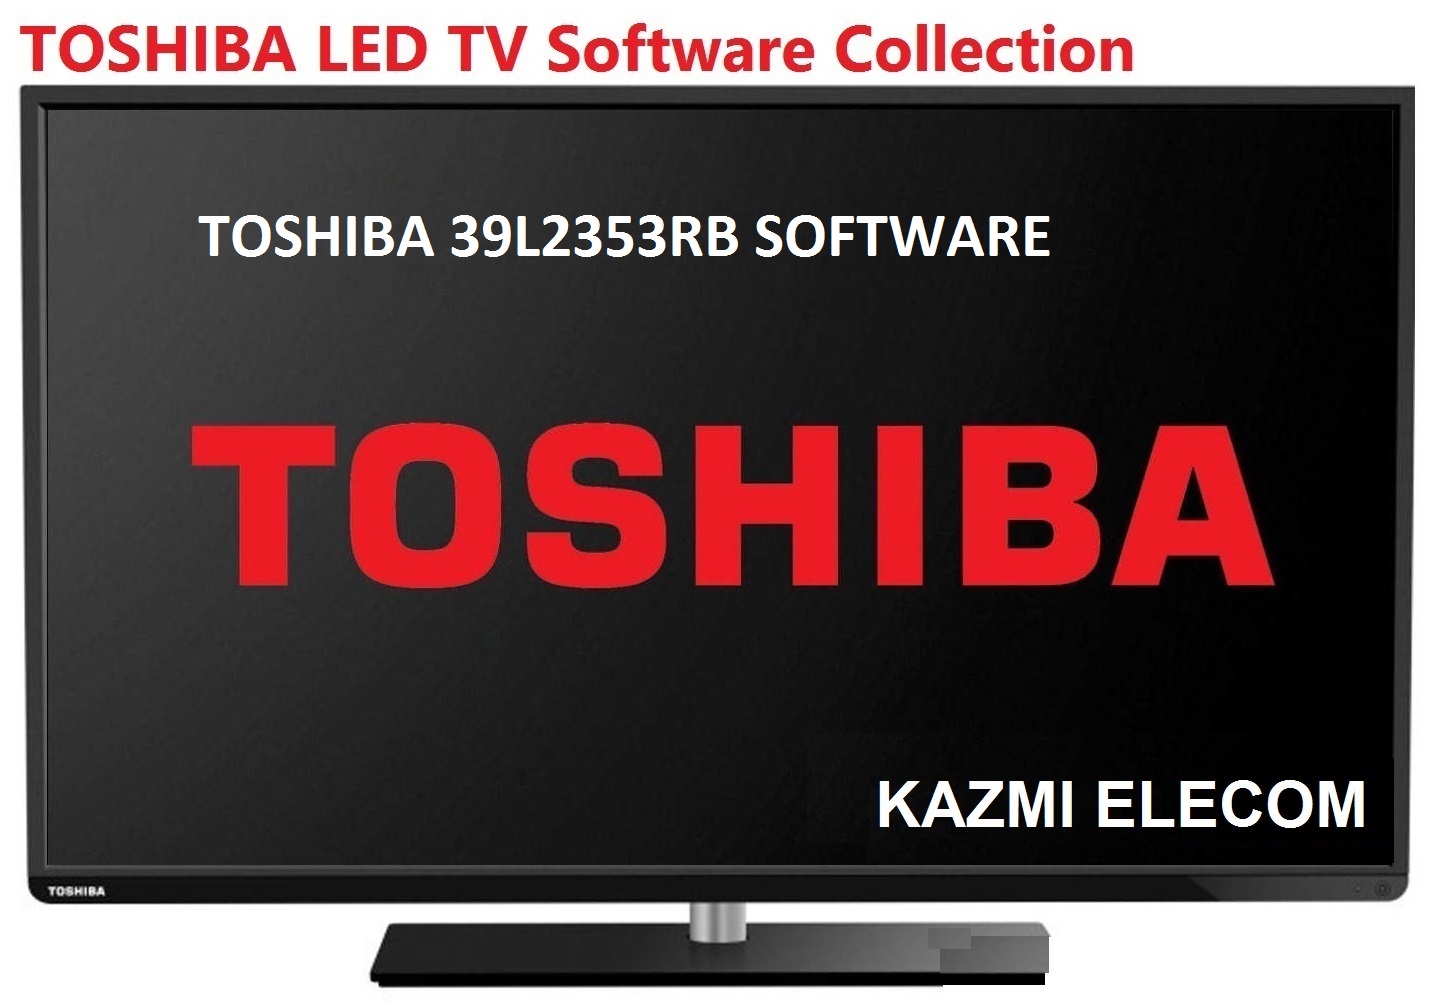 Toshiba 39L2353Rb